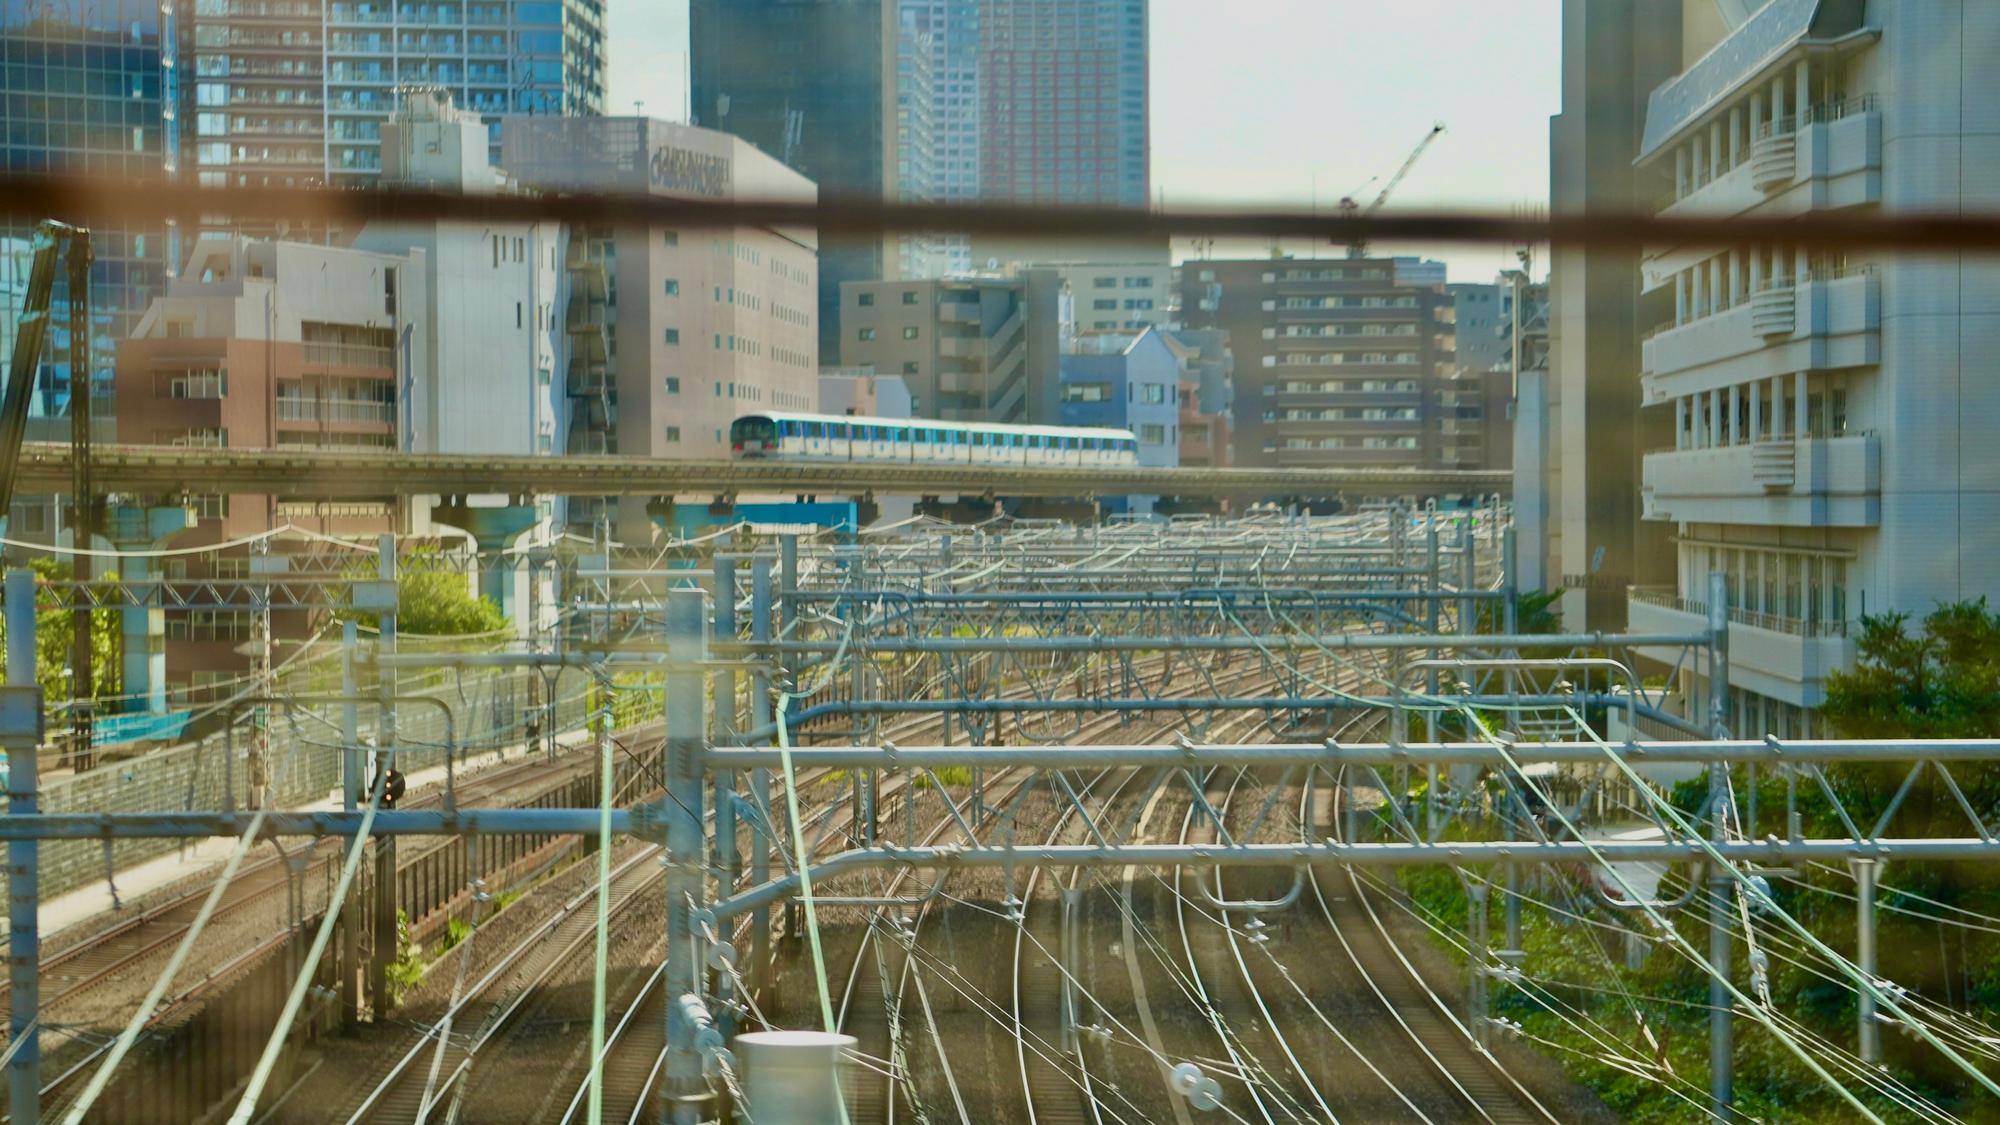 Japan's Electric Rail System